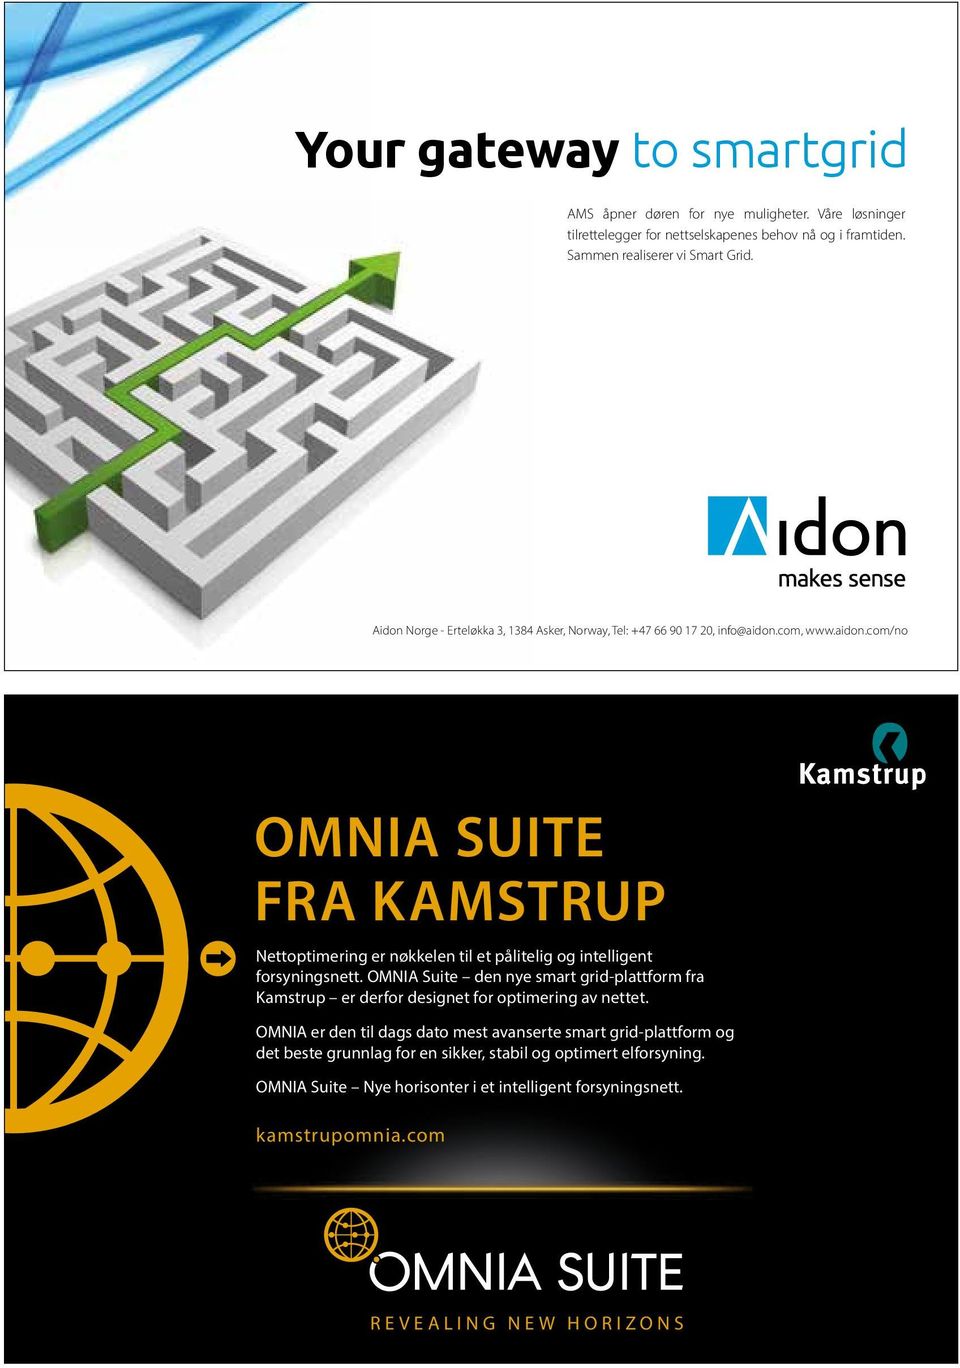 omnia suite den nye smart grid-plattform fra Kamstrup er derfor designet for optimering av nettet.